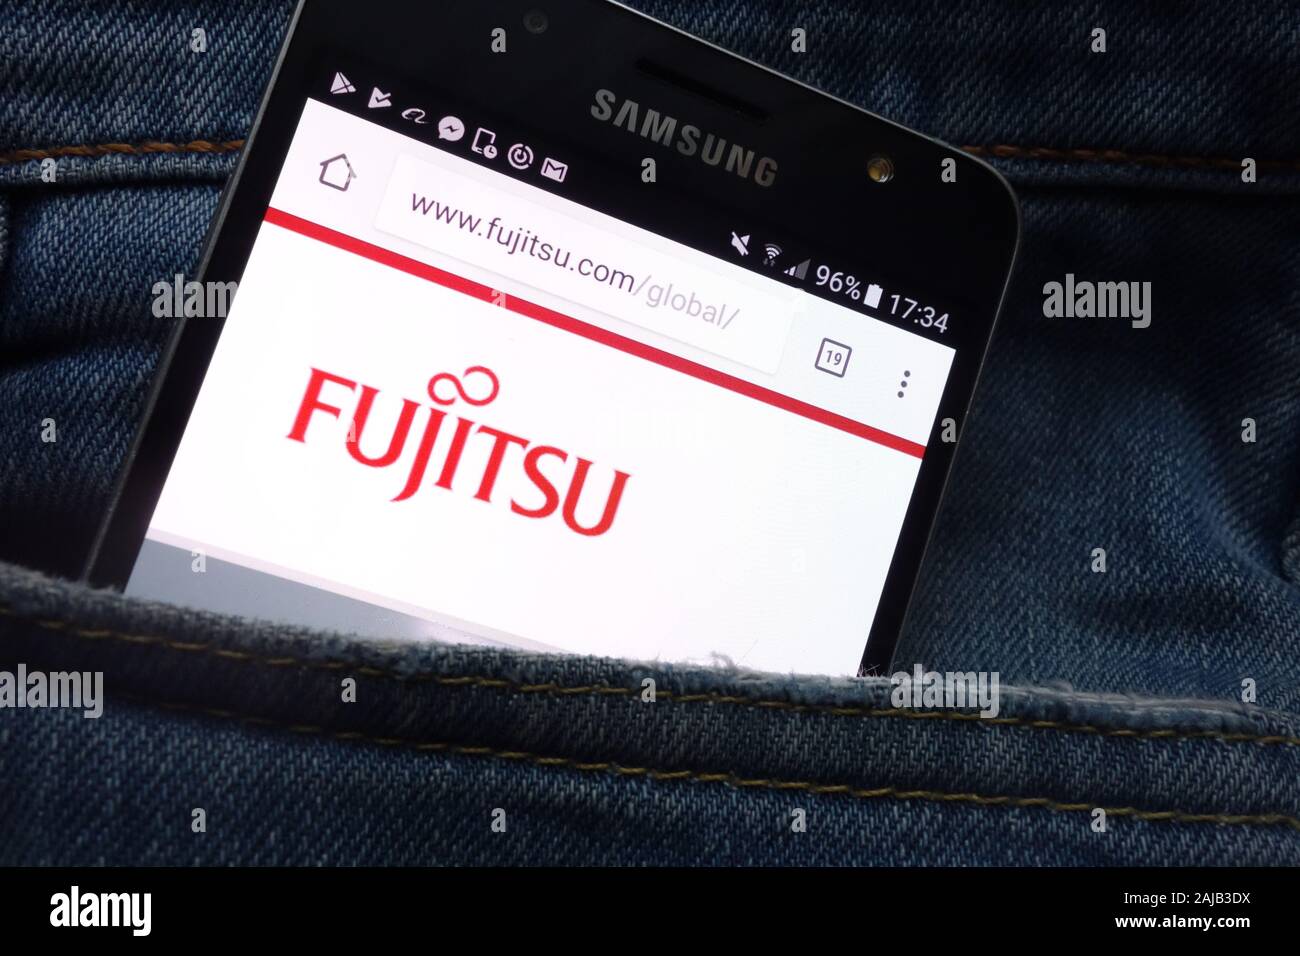 Fujitsu website displayed on Samsung smartphone hidden in jeans pocket Stock Photo